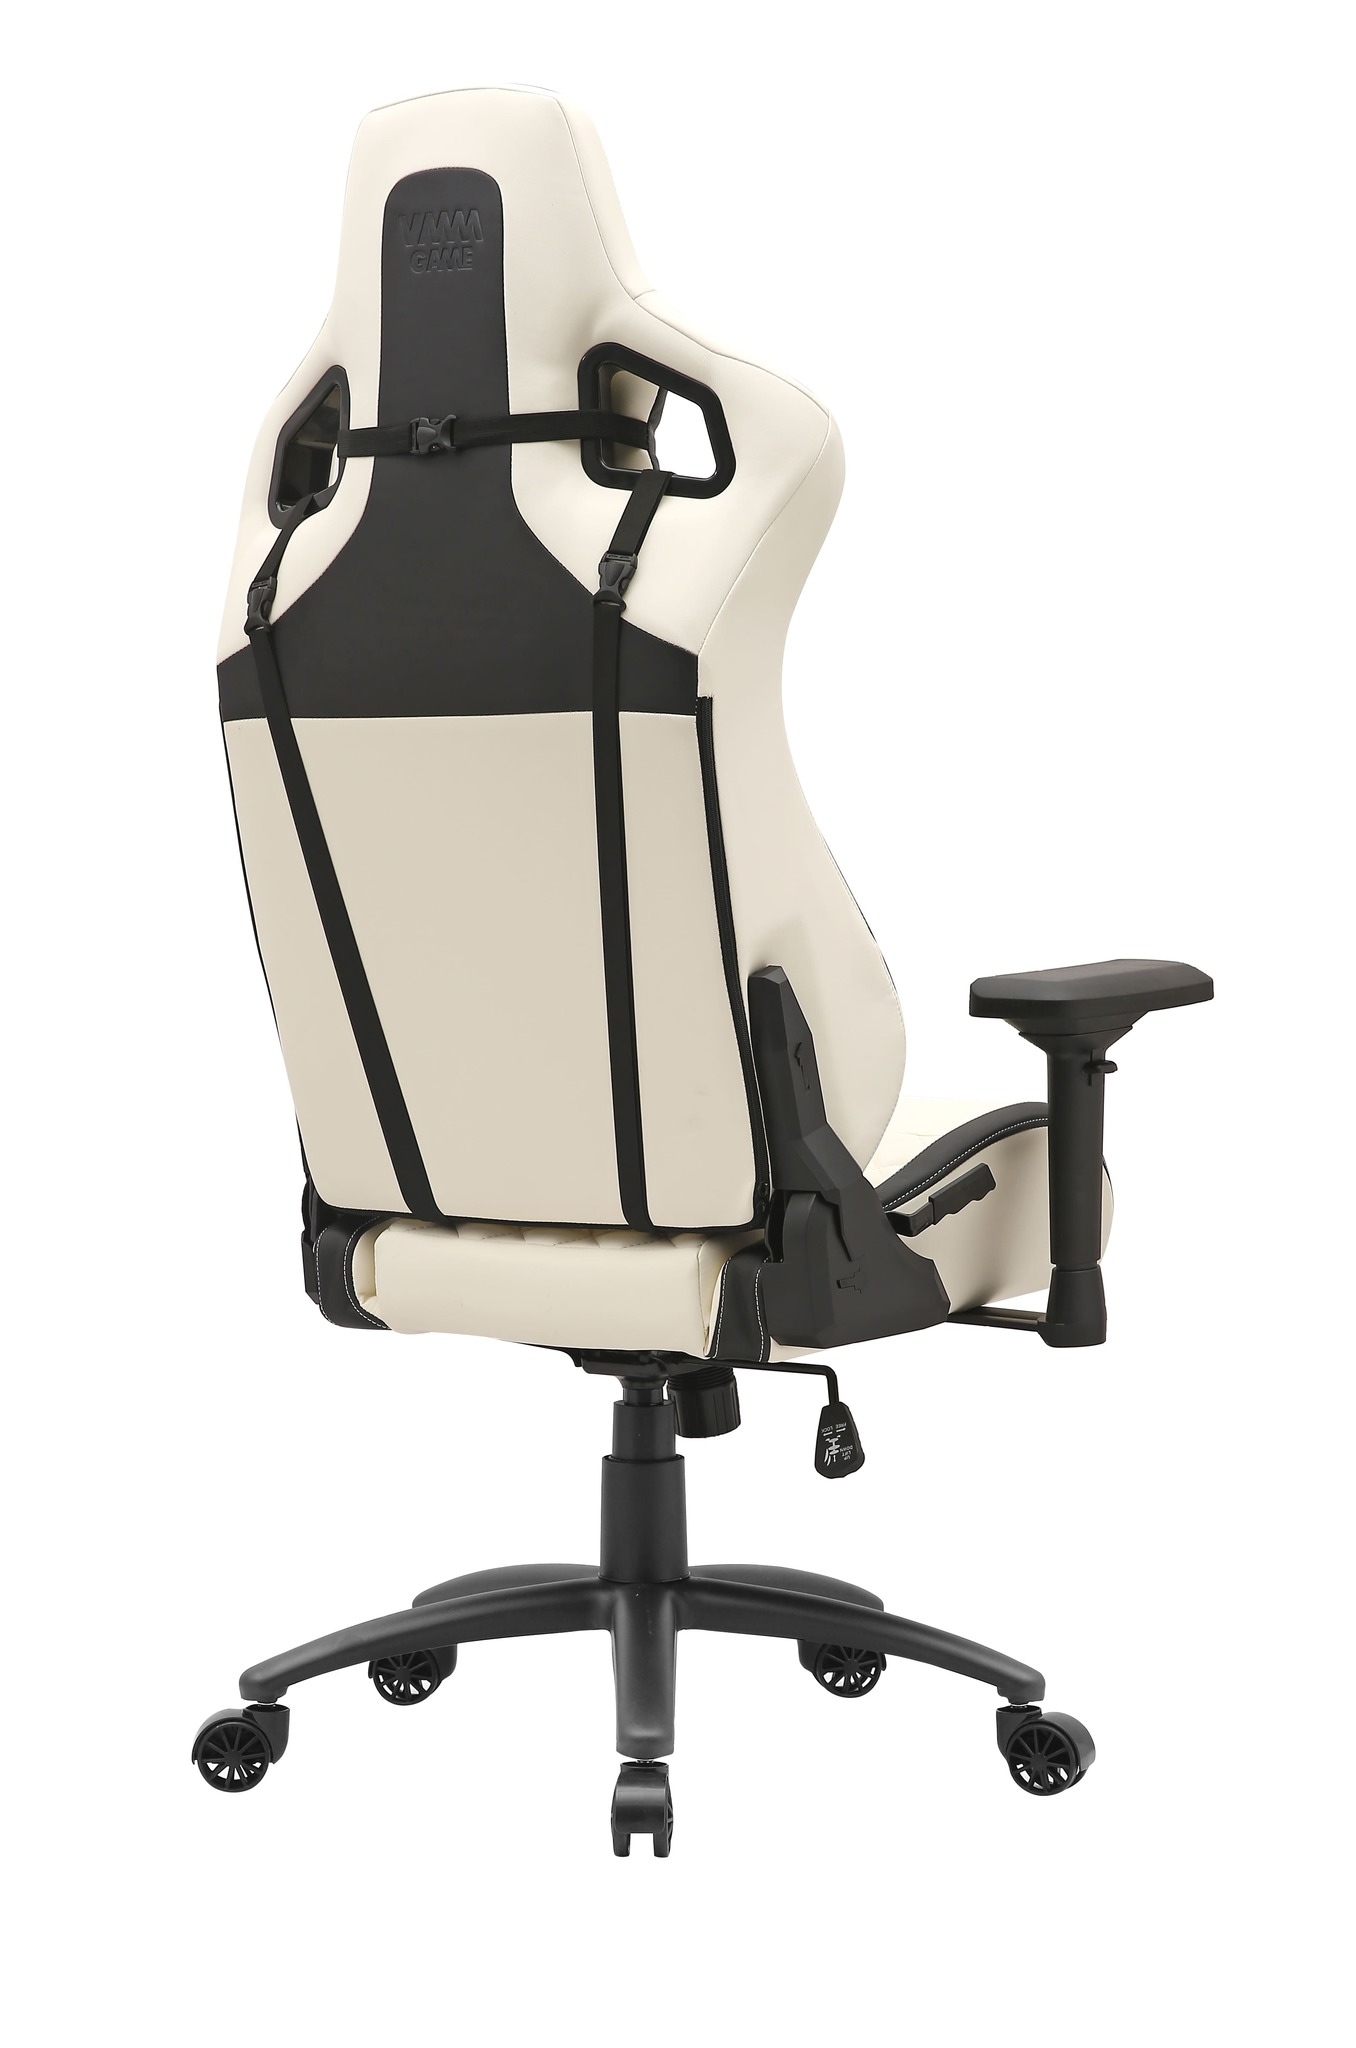 кресло игровое corsair t3 rush gaming chair